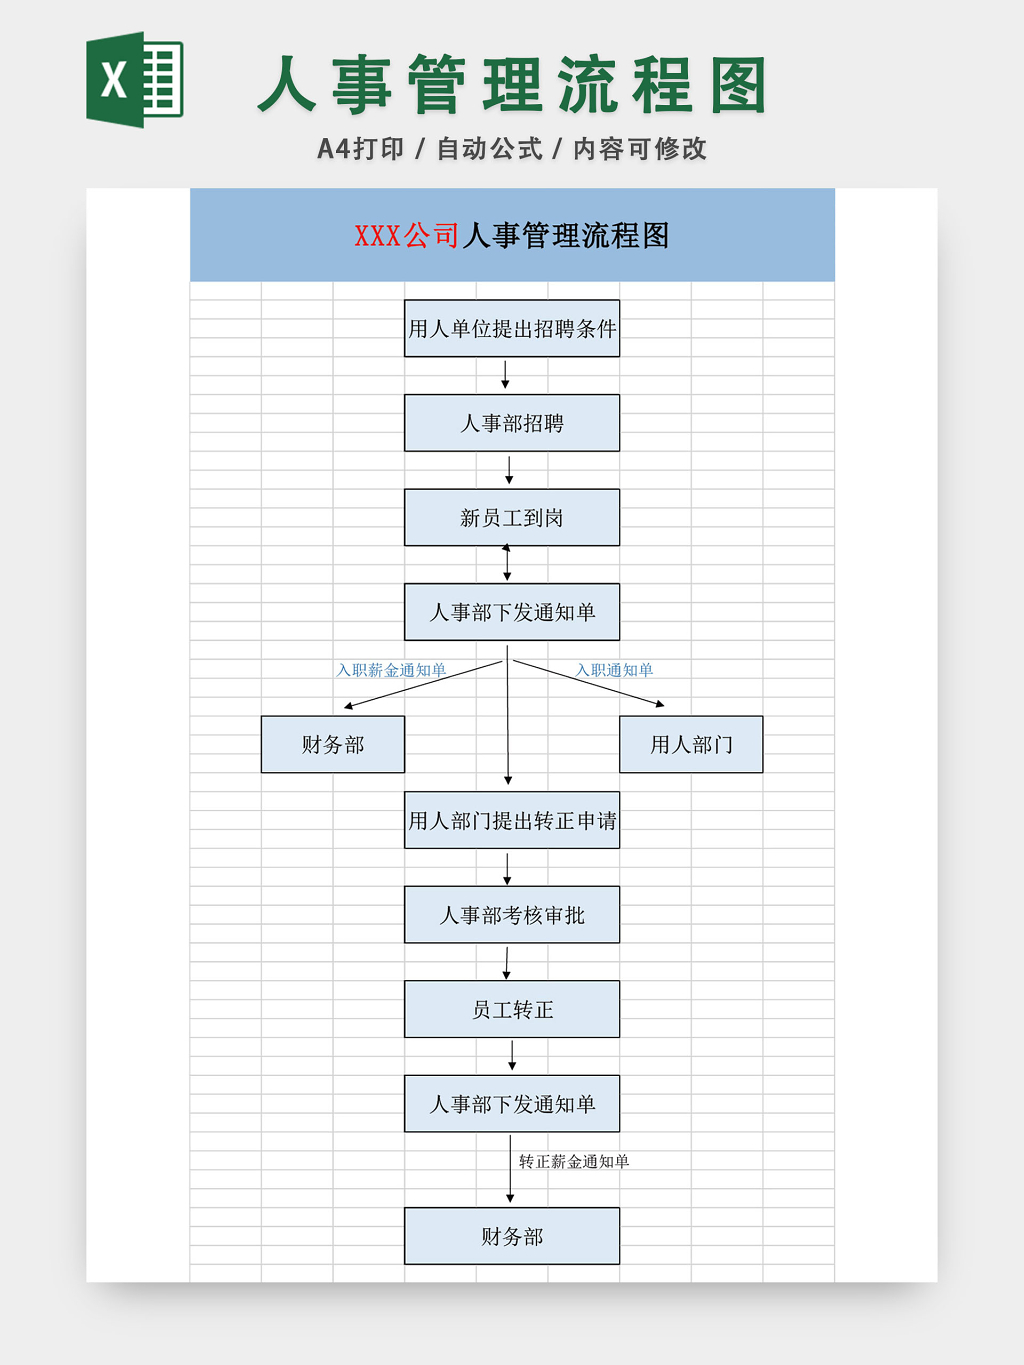 人事管理流程图模板EXCEL表